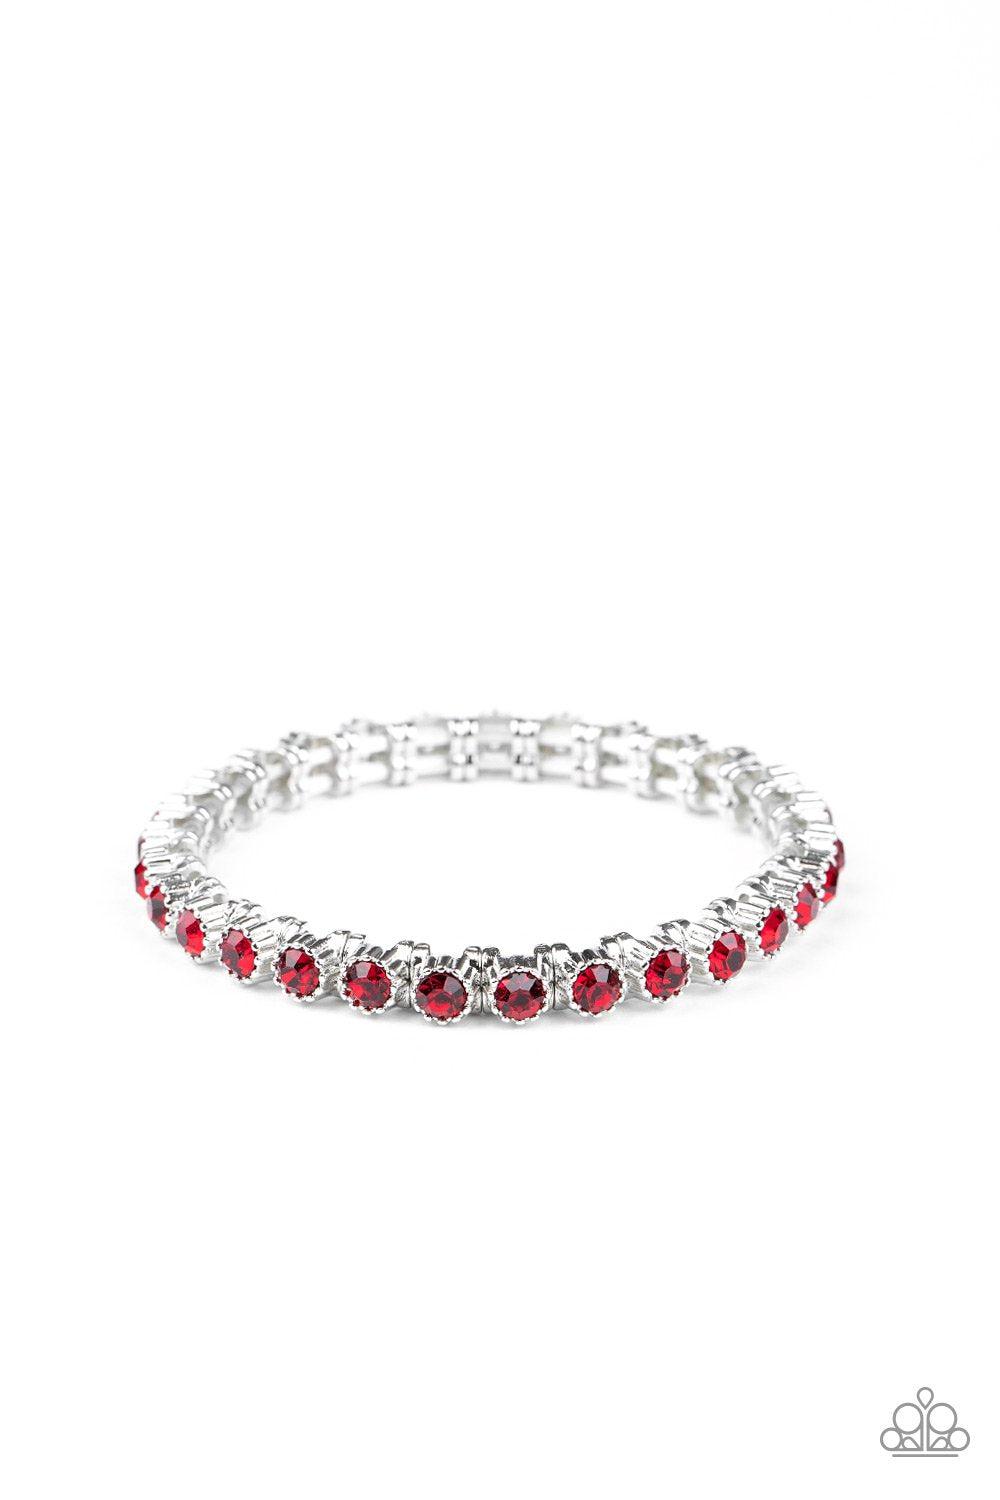 Starry Social Red Rhinestone Bracelet - Paparazzi Accessories-CarasShop.com - $5 Jewelry by Cara Jewels